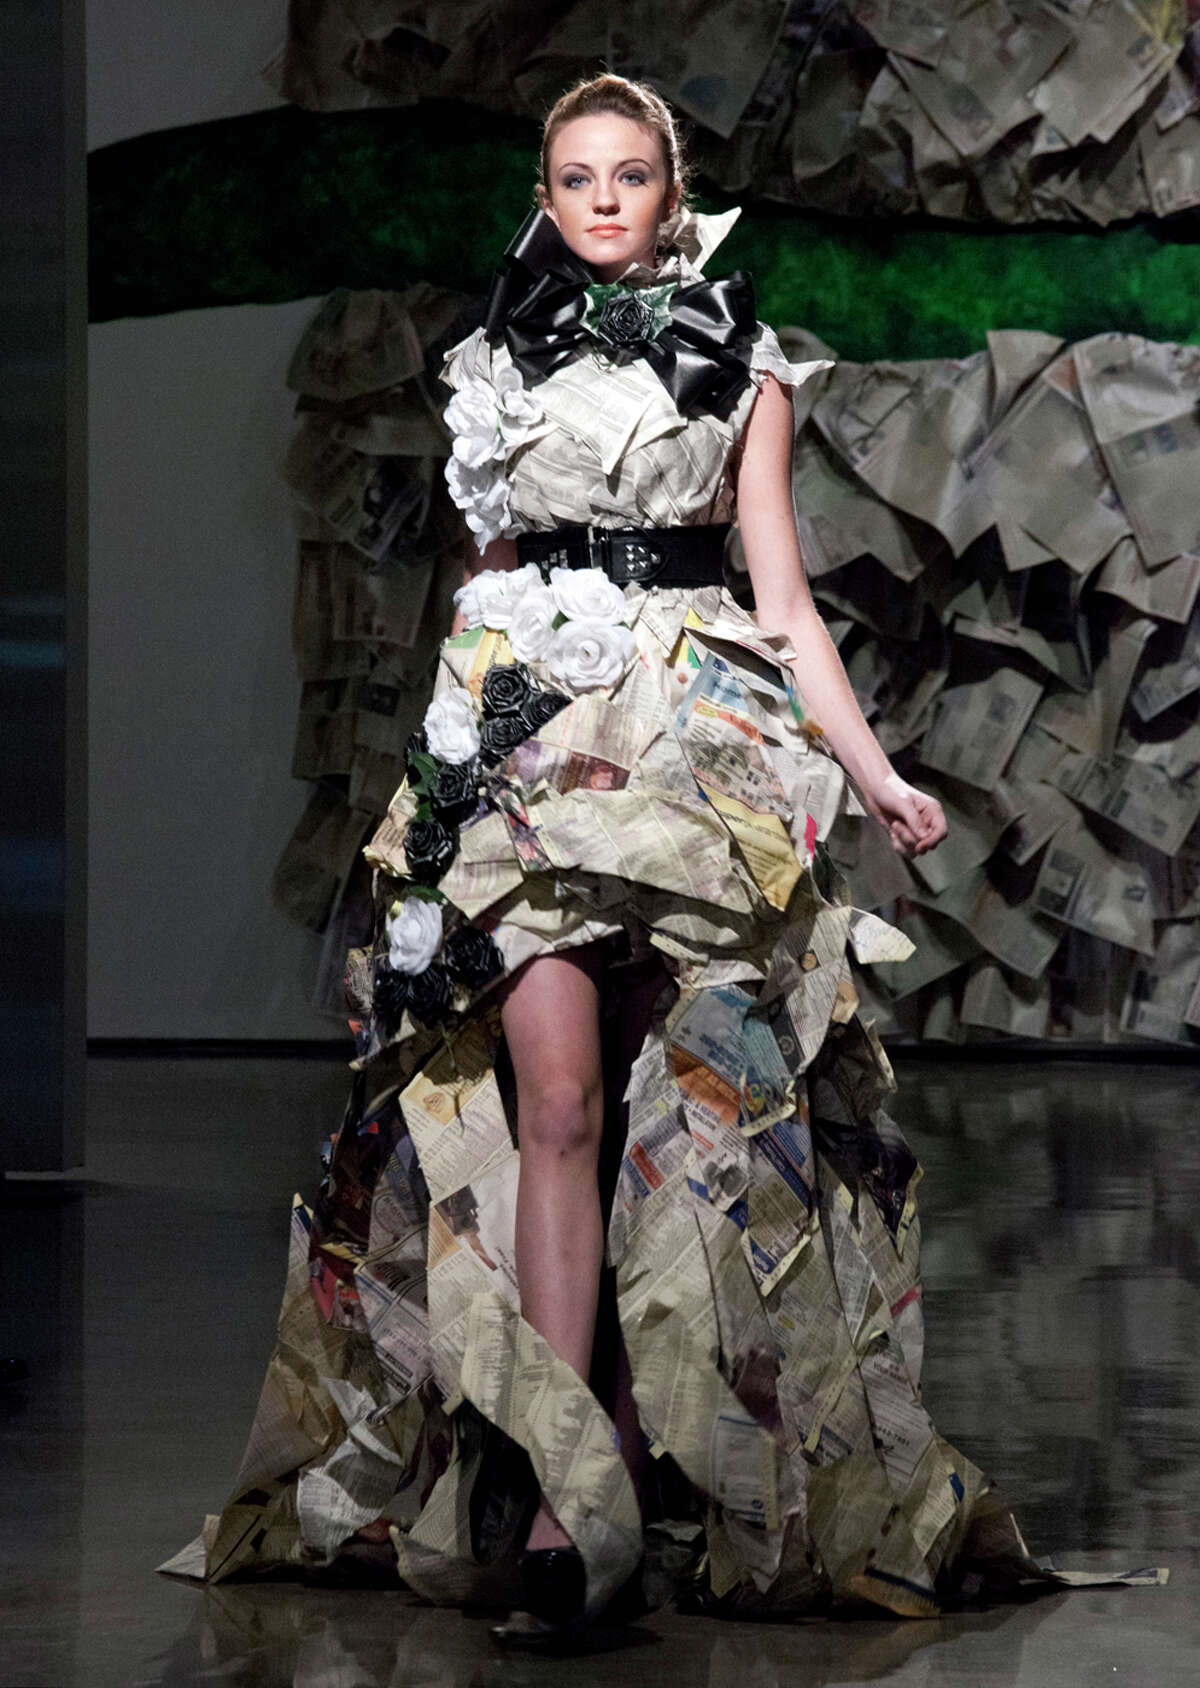 Eco-fashion show artistic, irreverent